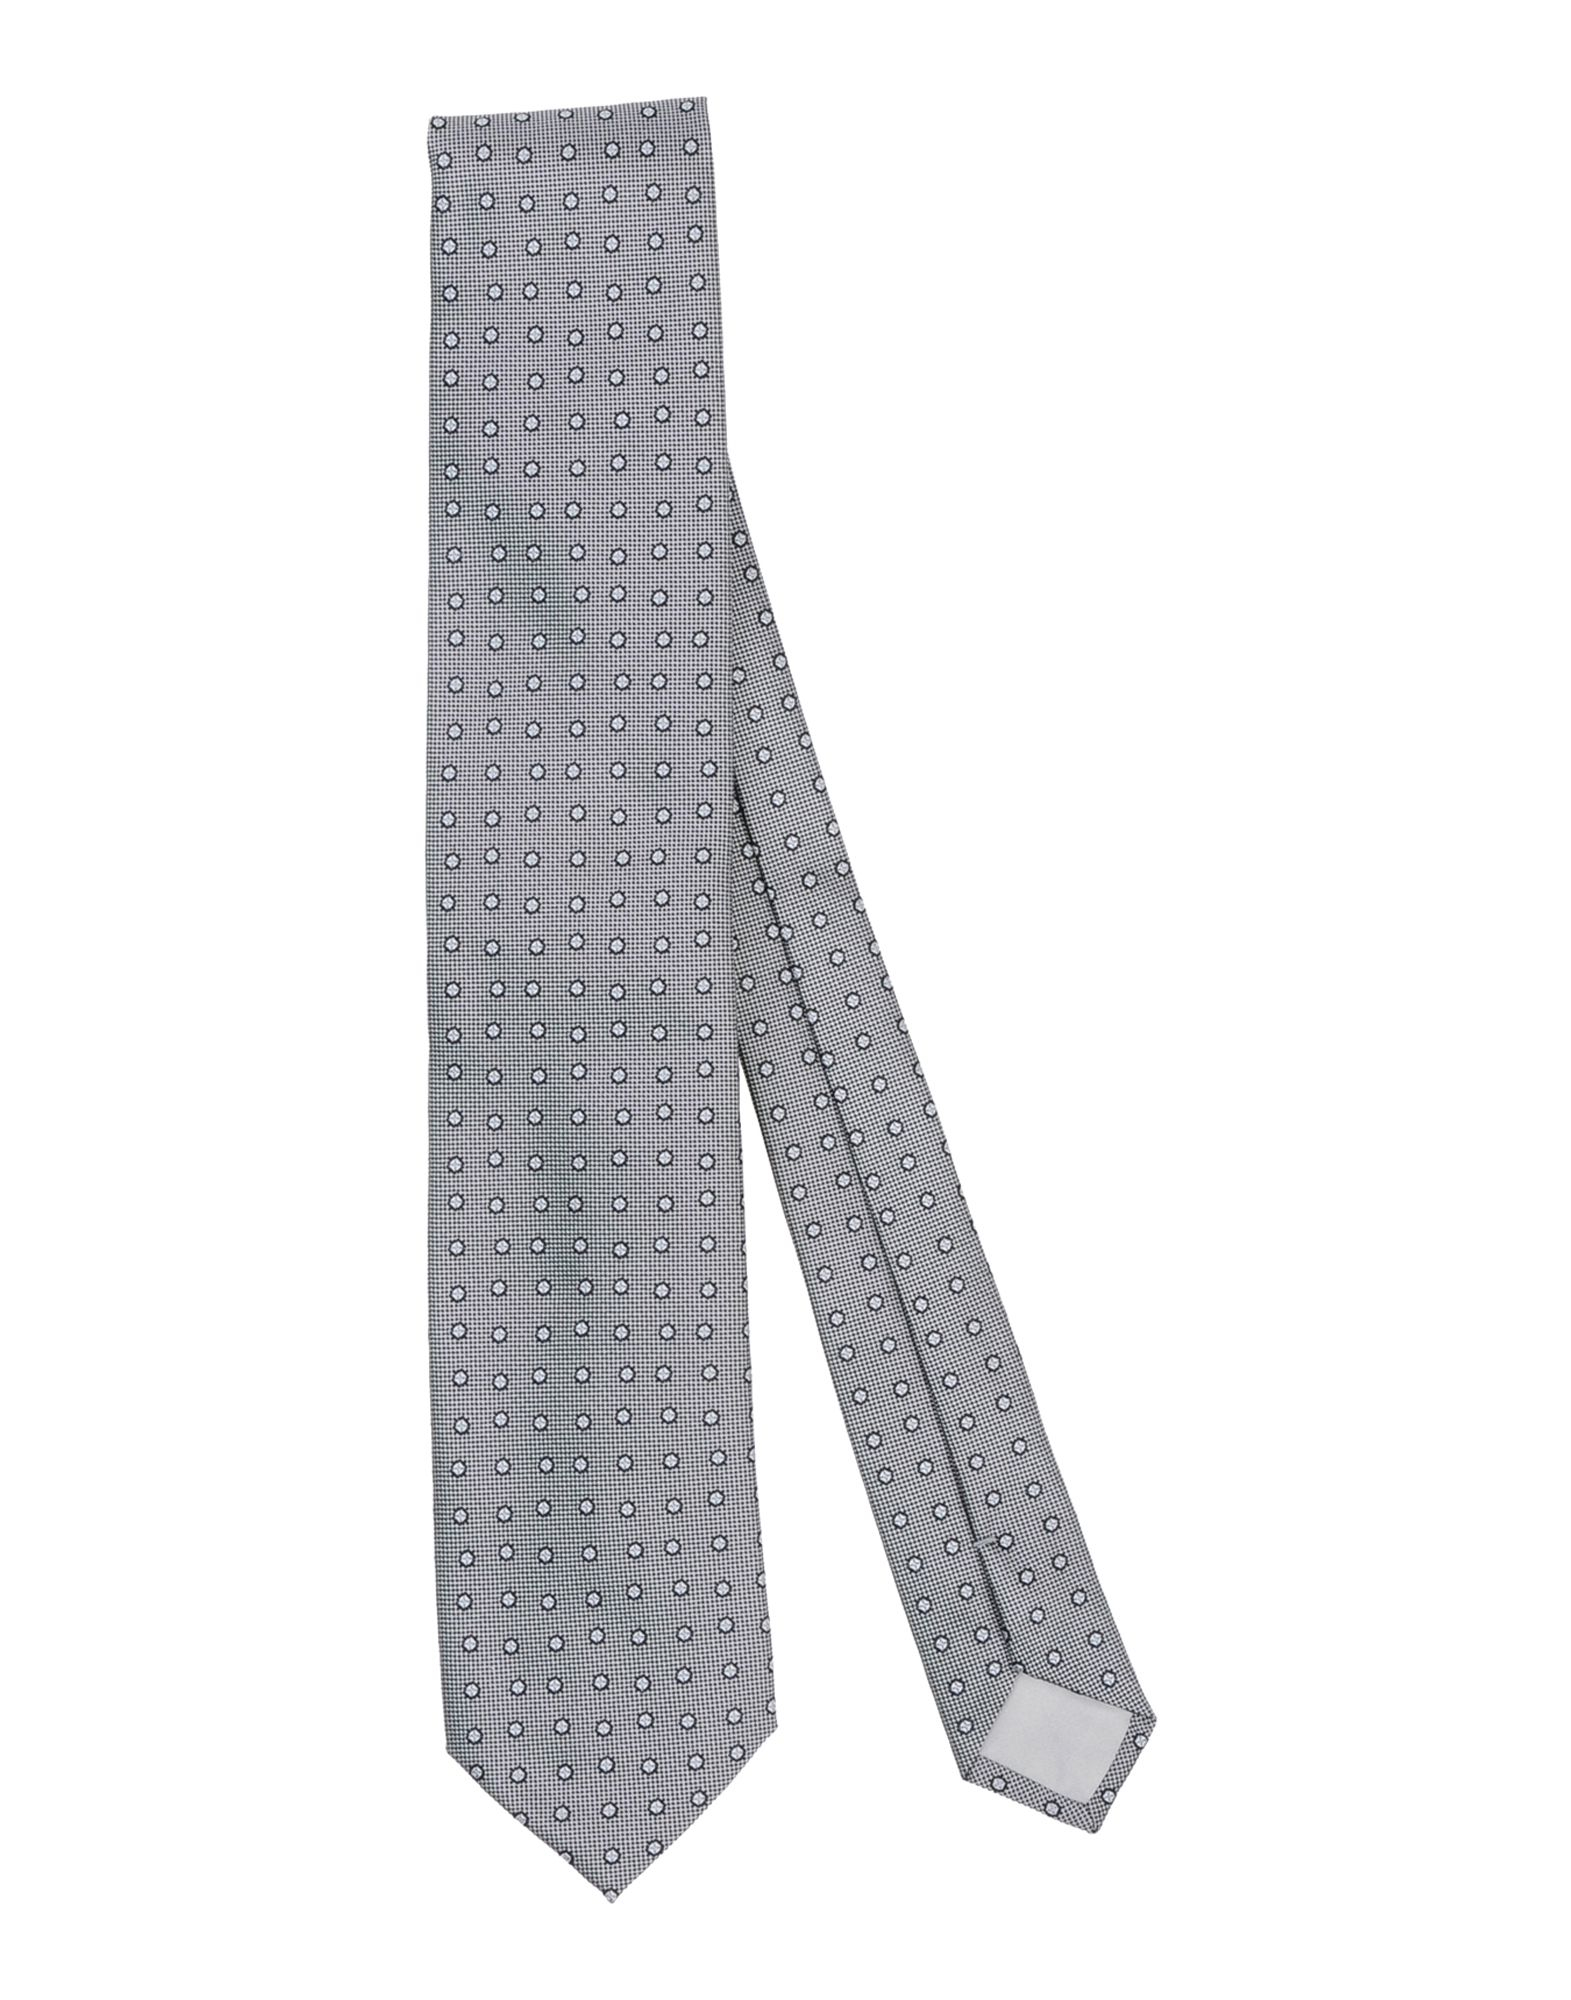 Lyst - Prada Tie in Gray for Men